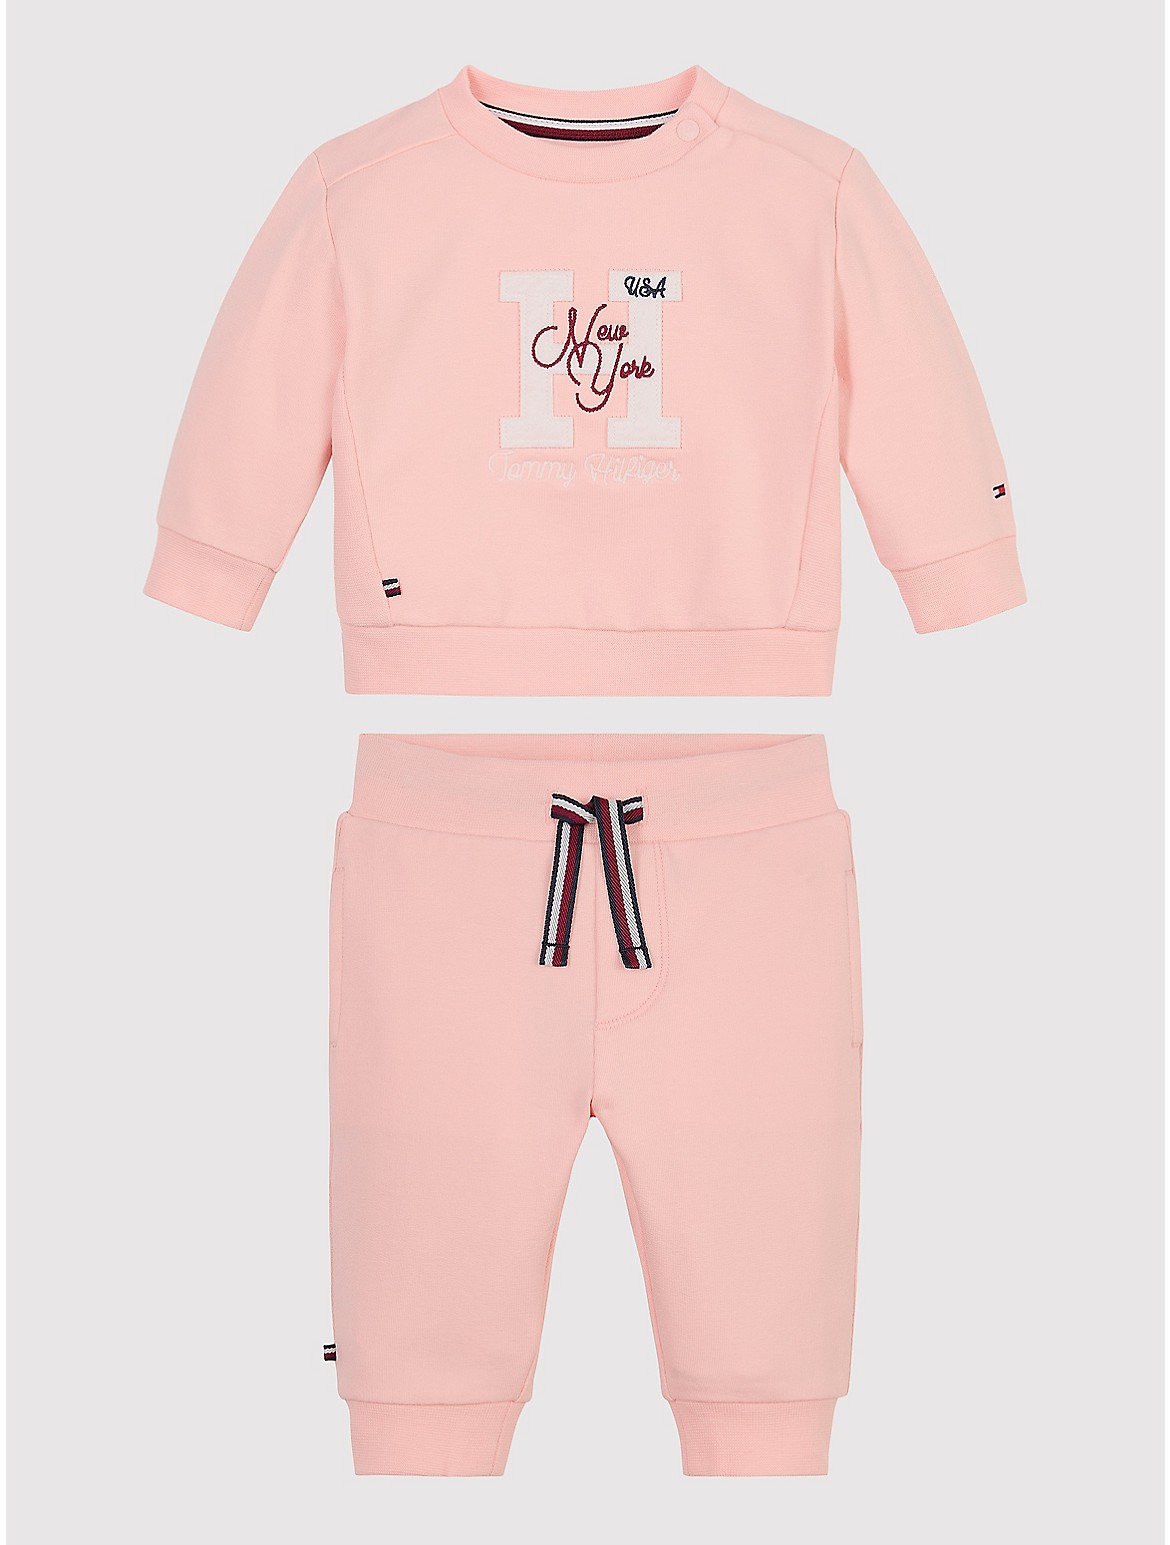 Tommy Hilfiger Babies' Blame The Cat Sweatsuit Set - Pink - 12M